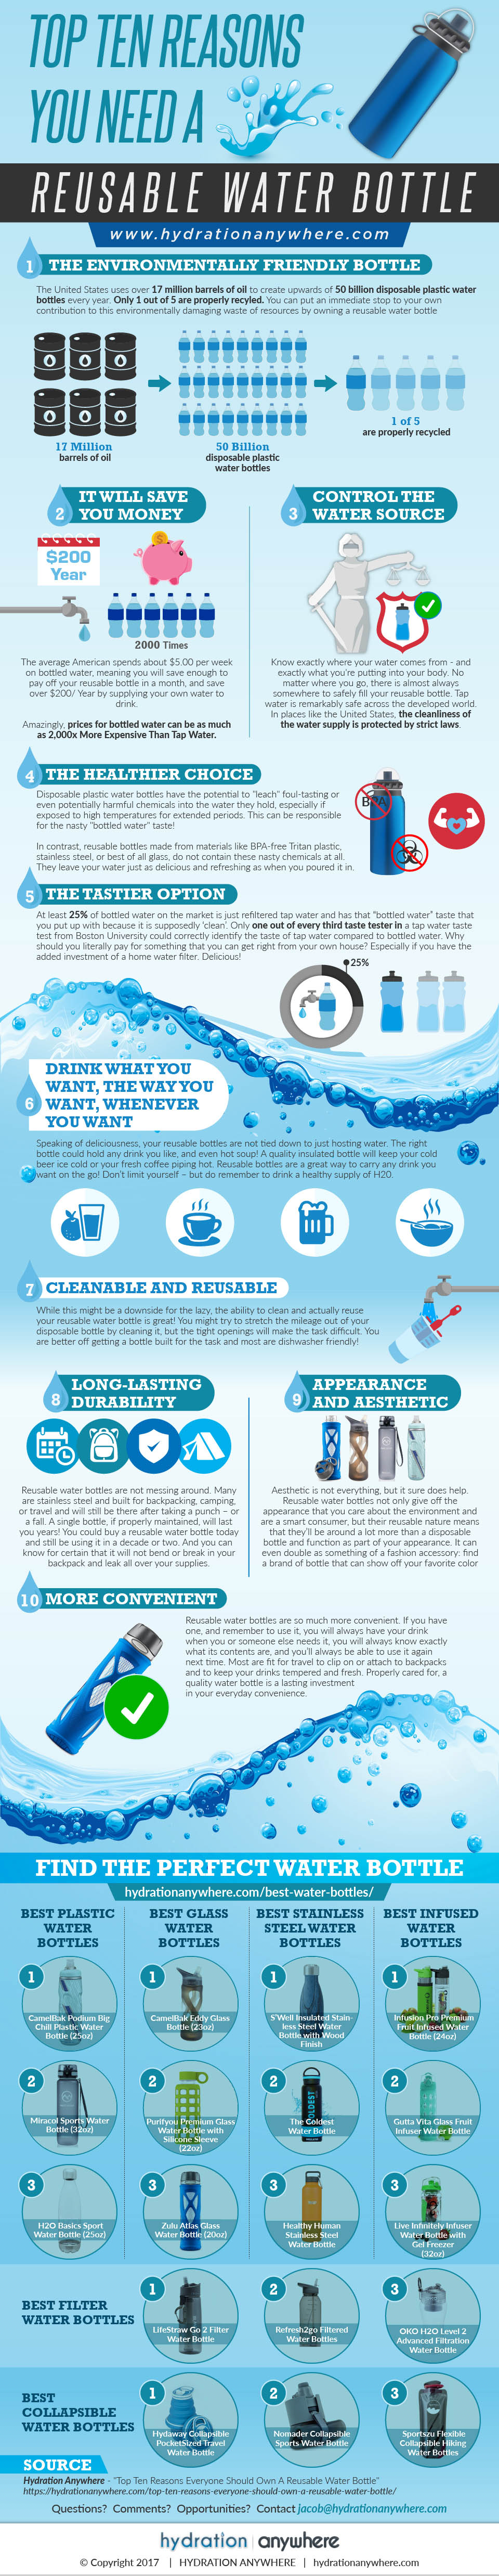 Top Ten Reasons You Need A Reusable Water Bottle